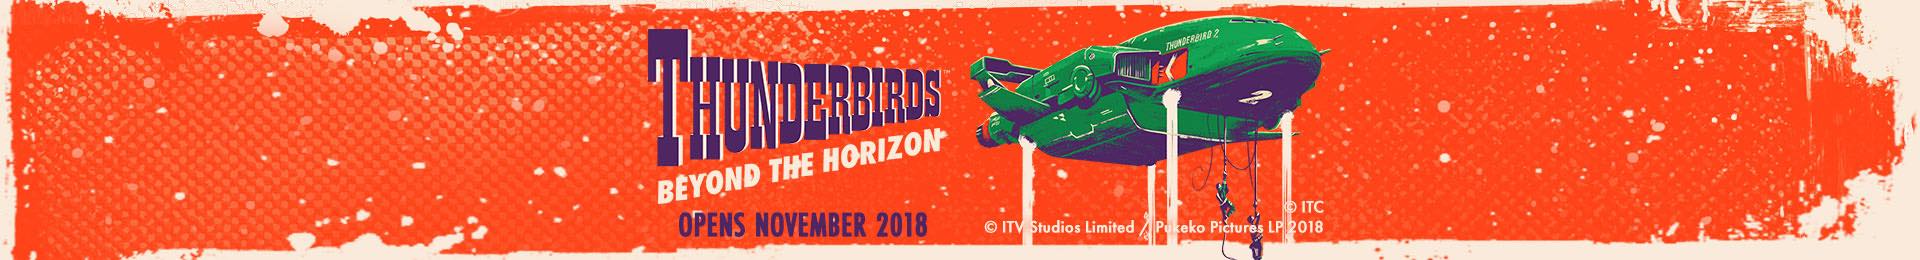 Thunderbirds: Beyond the Horizon banner image